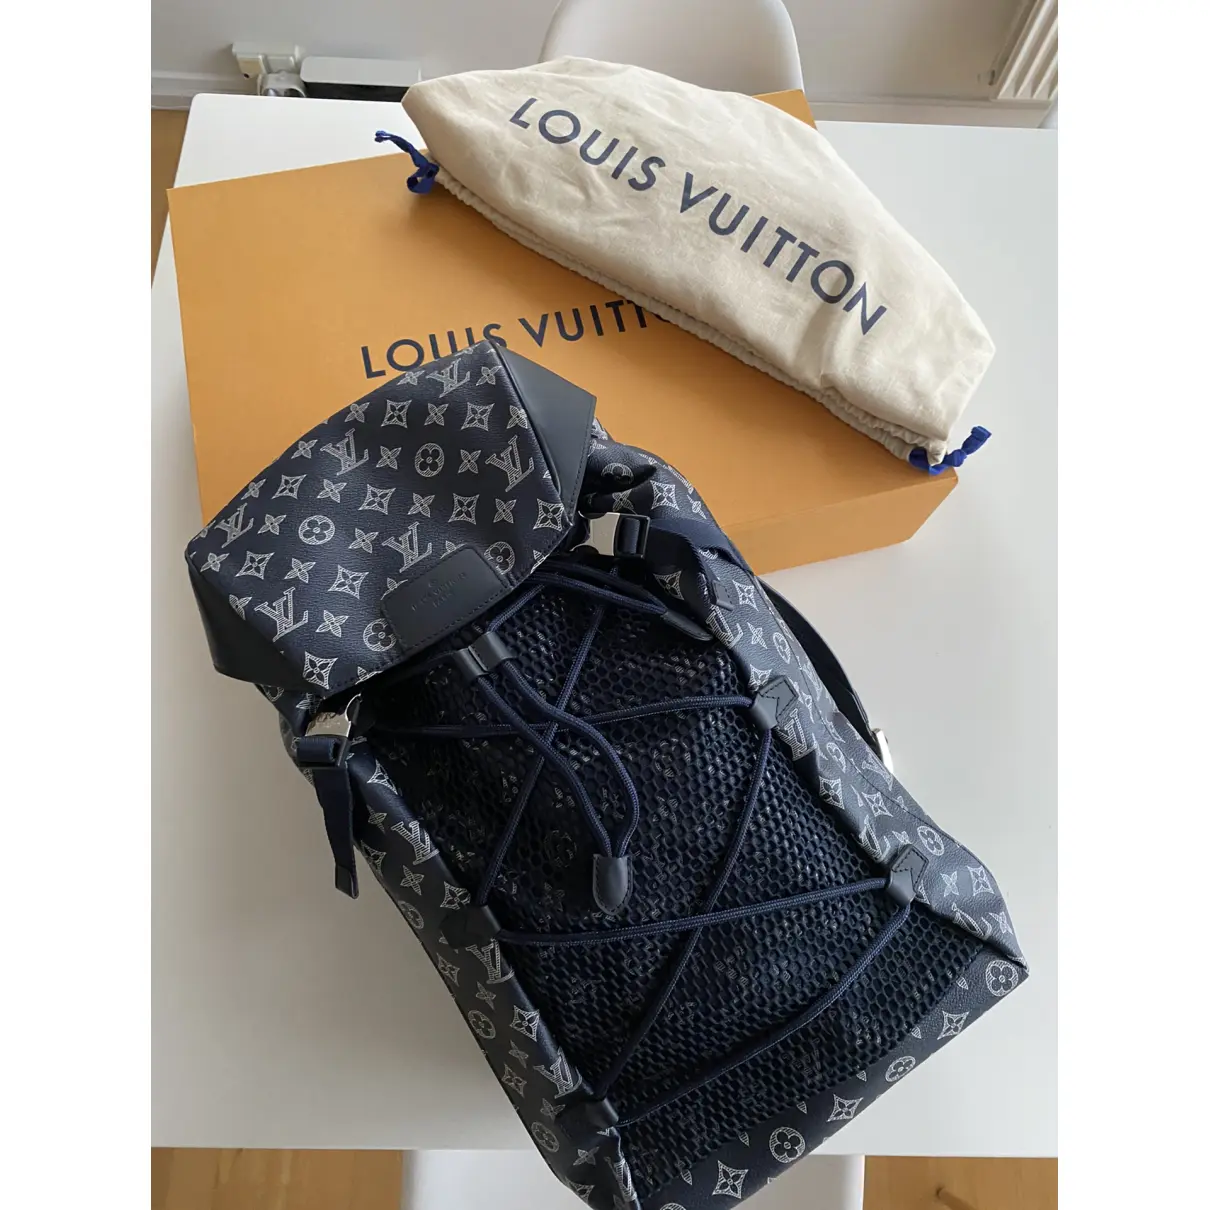 Buy Louis Vuitton Chapman Brothers Lion Messenger leather travel bag online